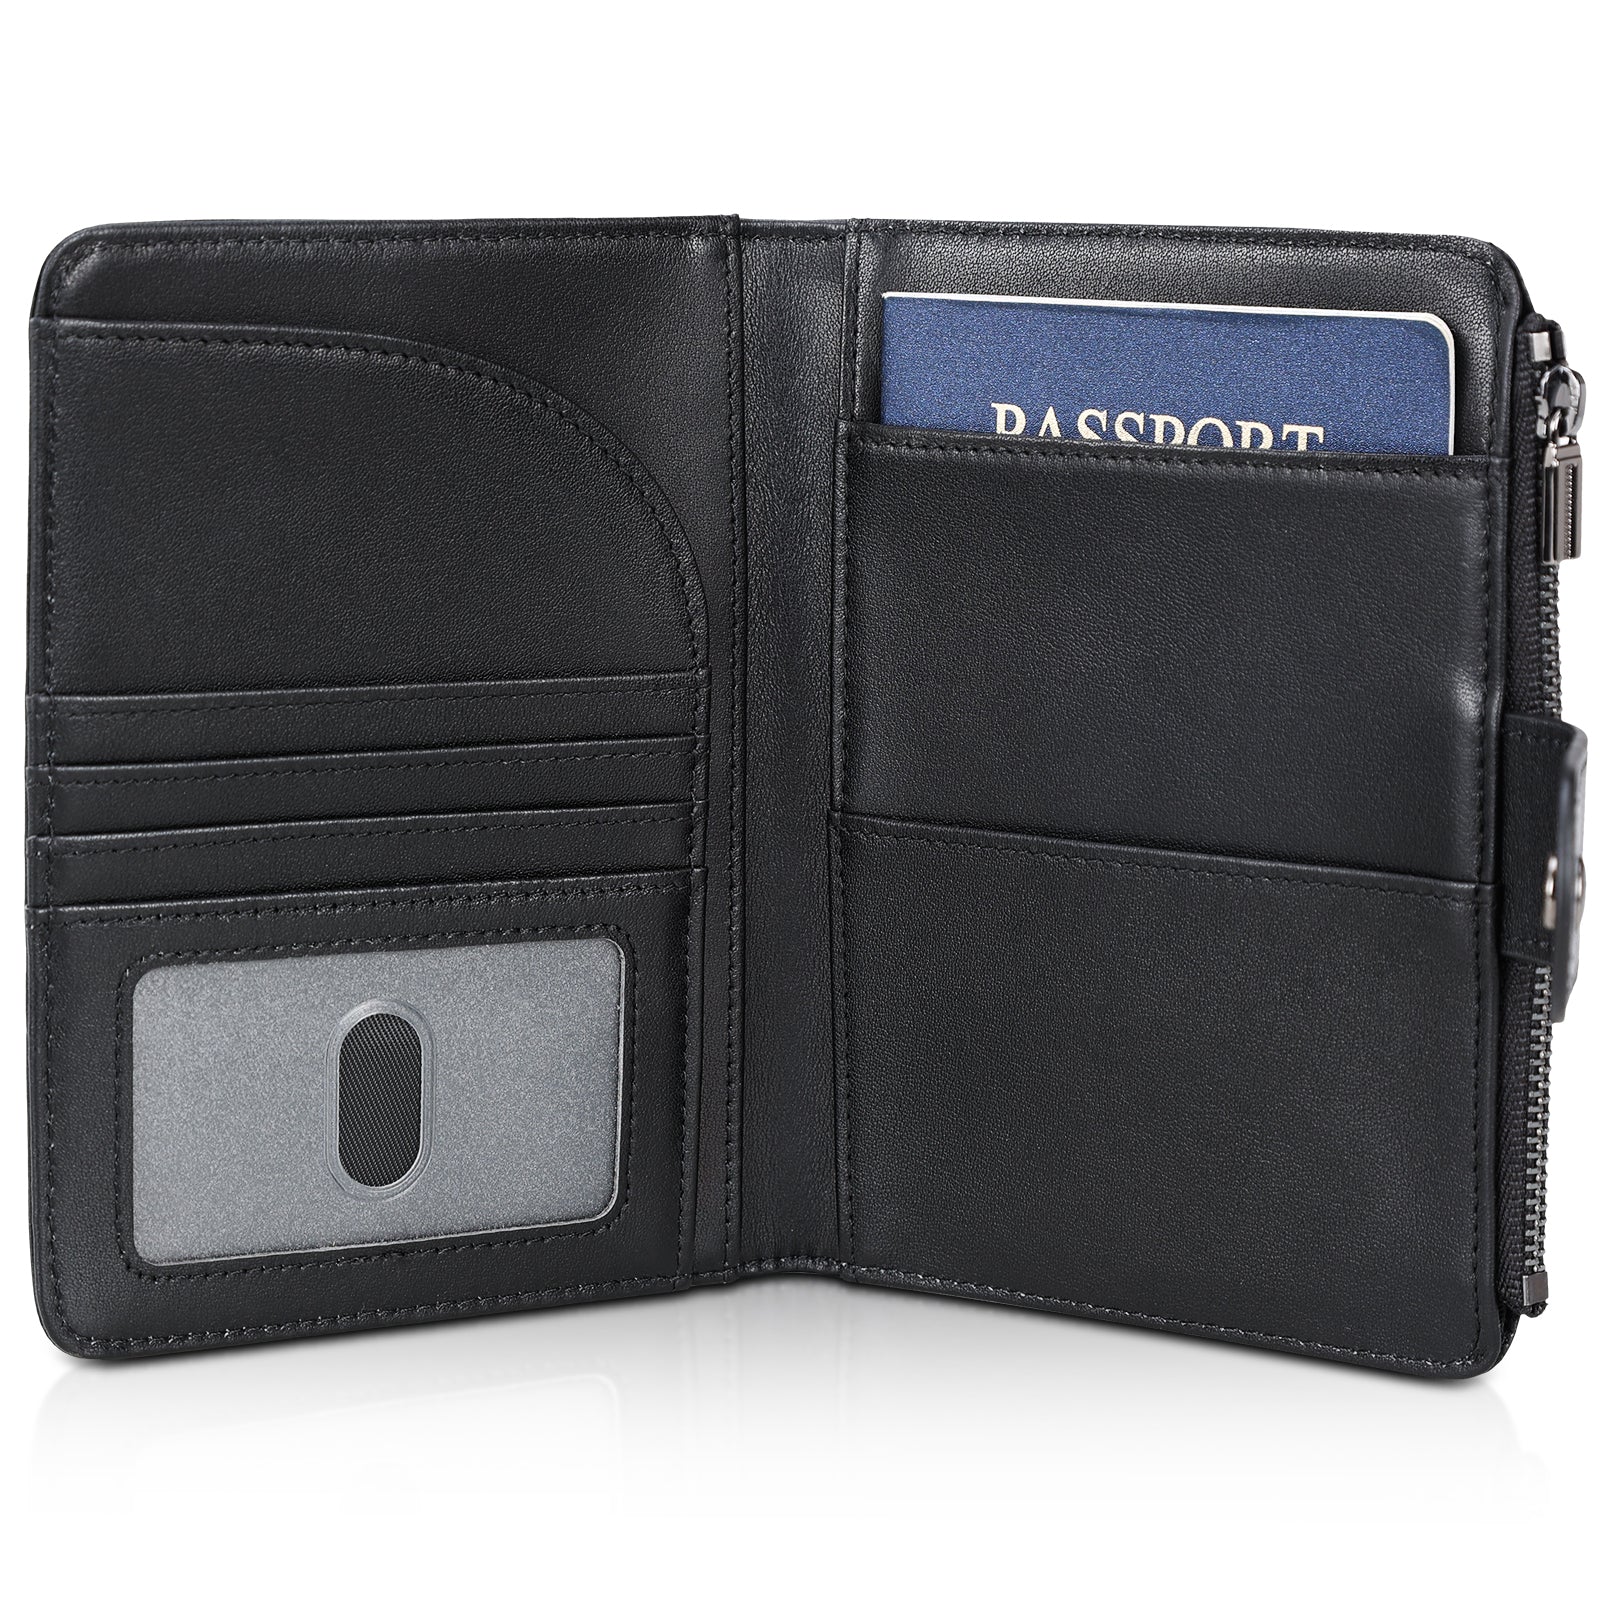 Full Grain Leather 2 Passports Travel Wallet Holder RFID Blocking (Black)